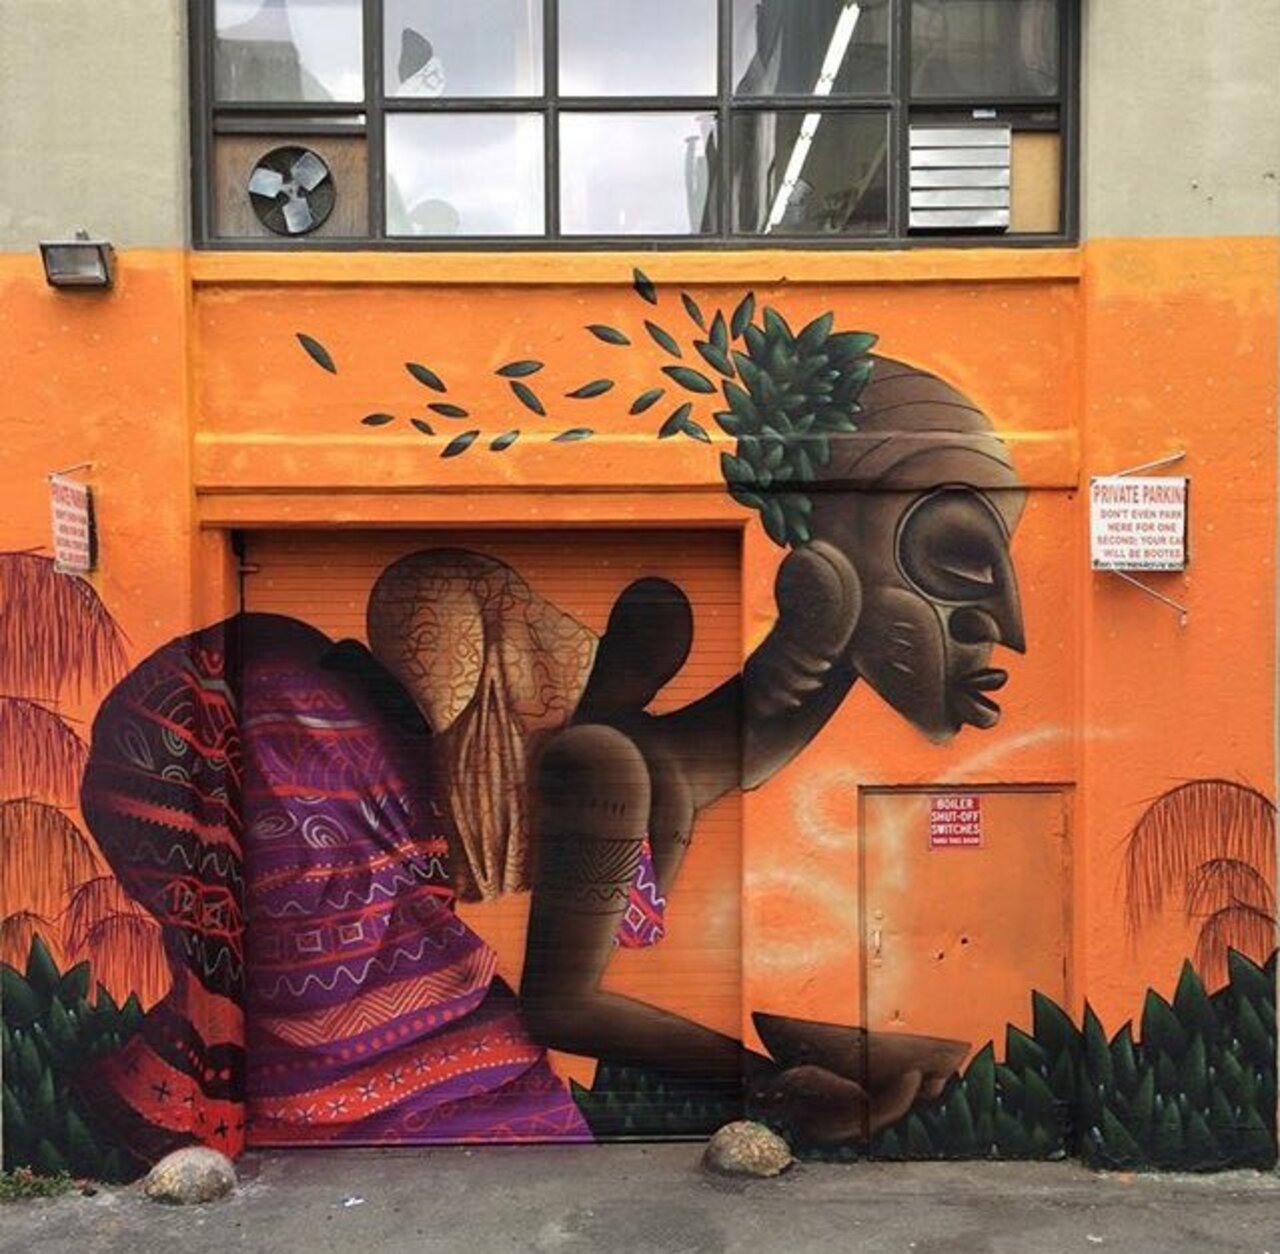 New Street Art by Alexandre Keto in NYC 

#art #graffiti #mural #streetart https://t.co/hRoGoCxfJZ